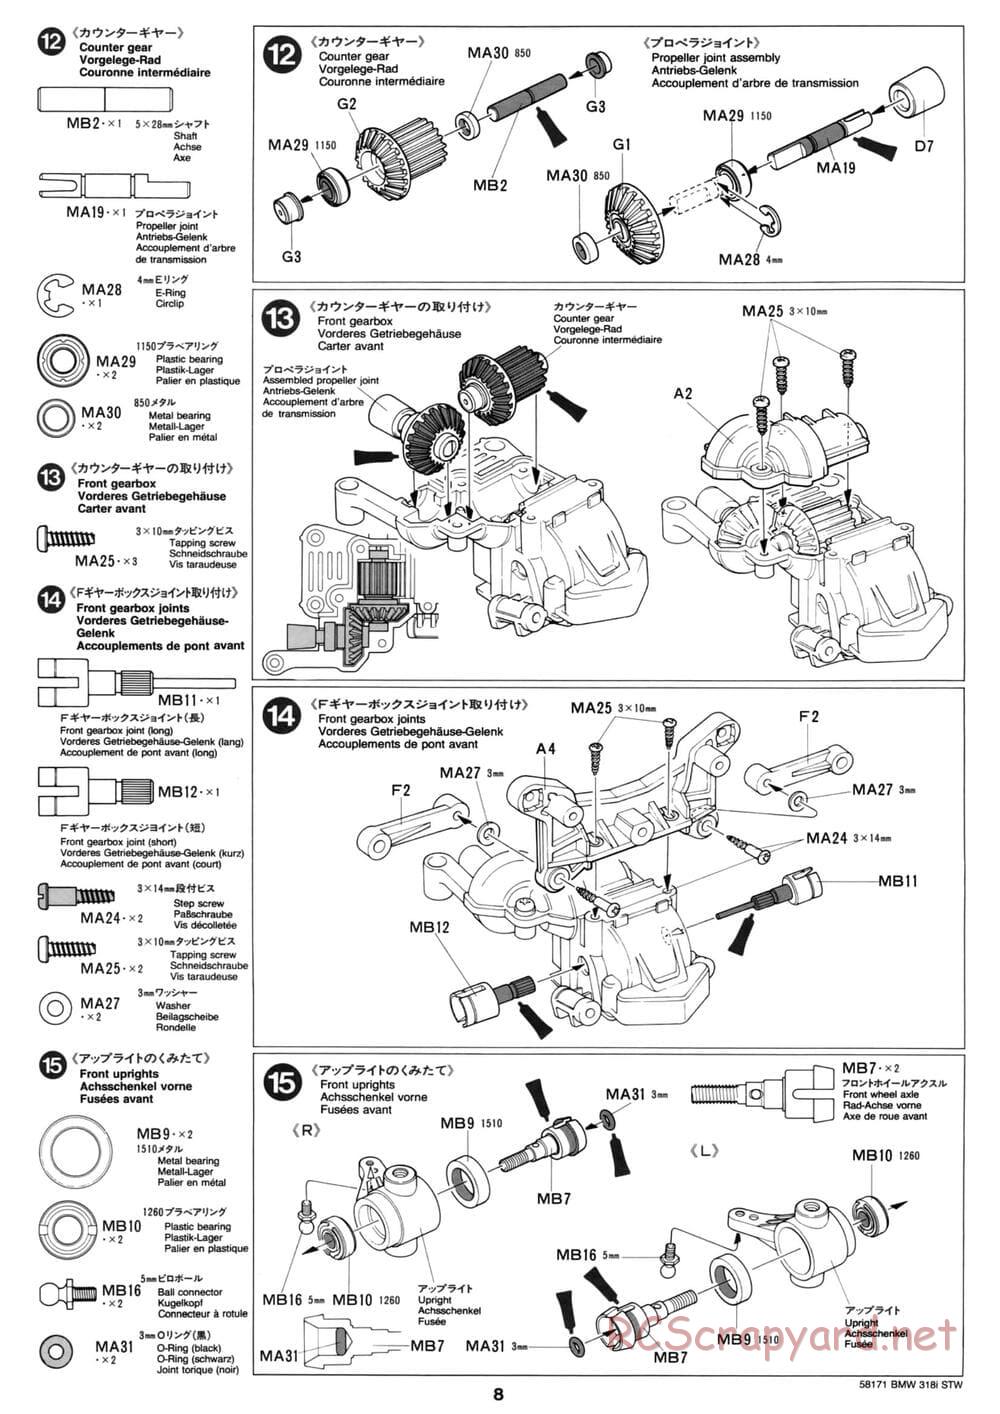 Tamiya - BMW 318i STW - TA-02 Chassis - Manual - Page 8